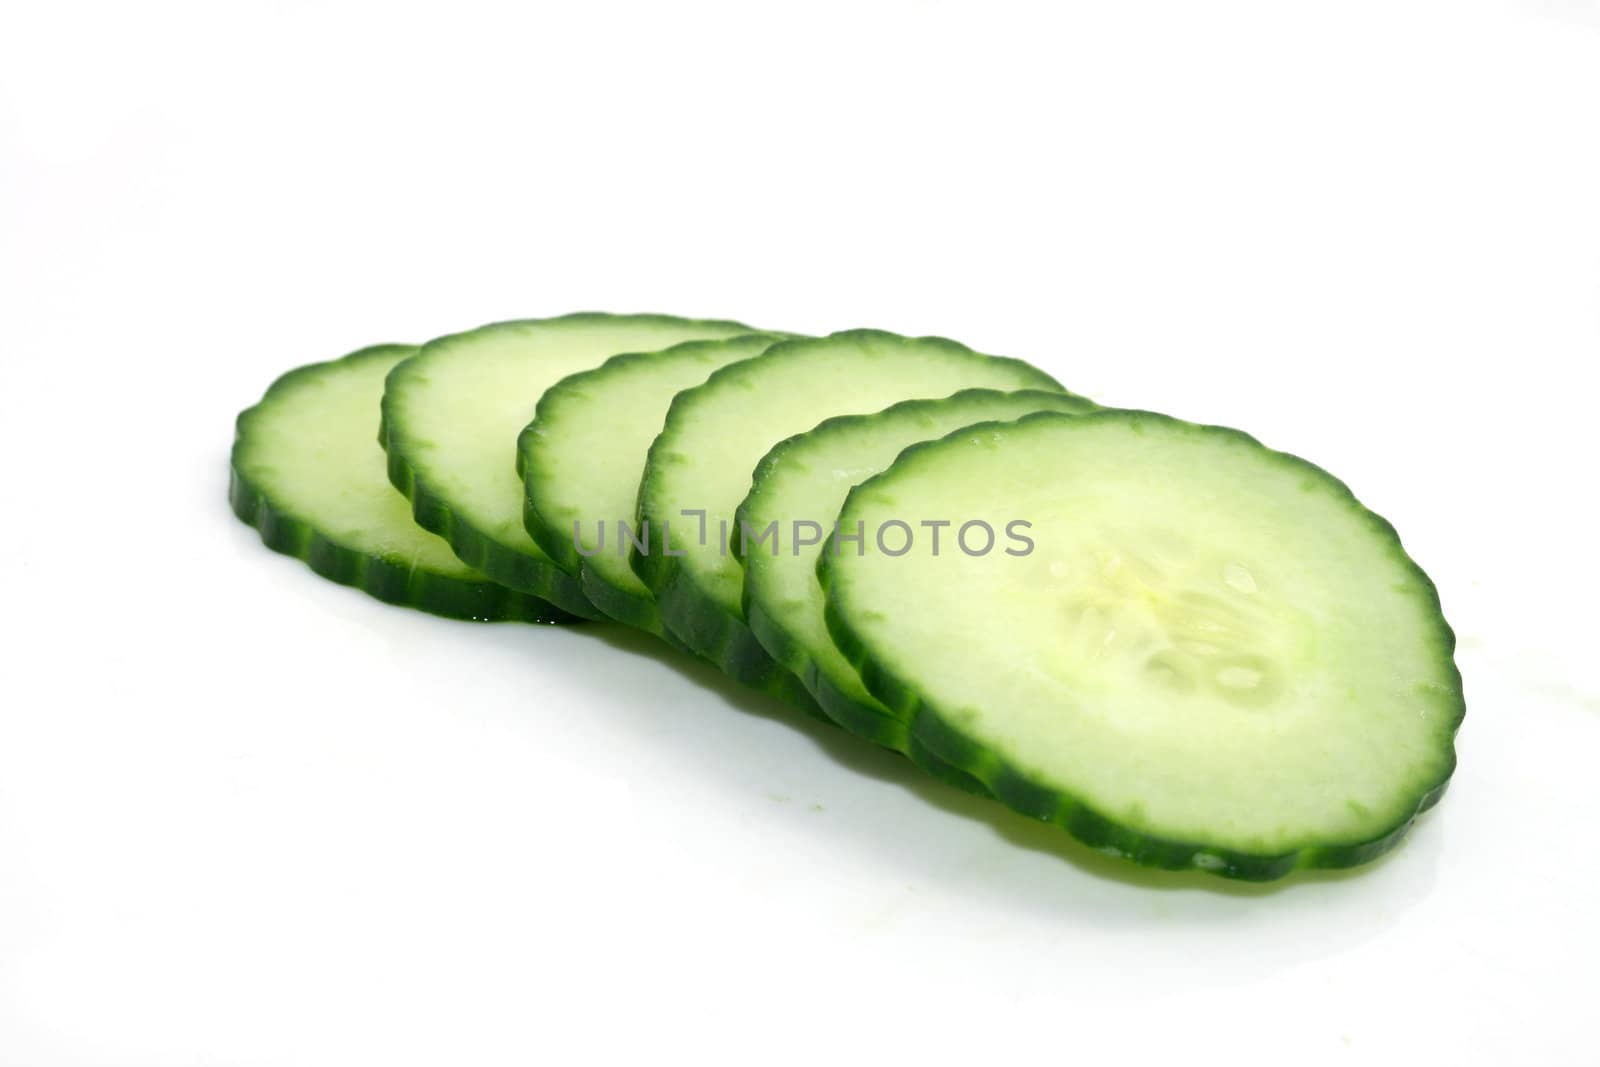 six green cut cucumber slices